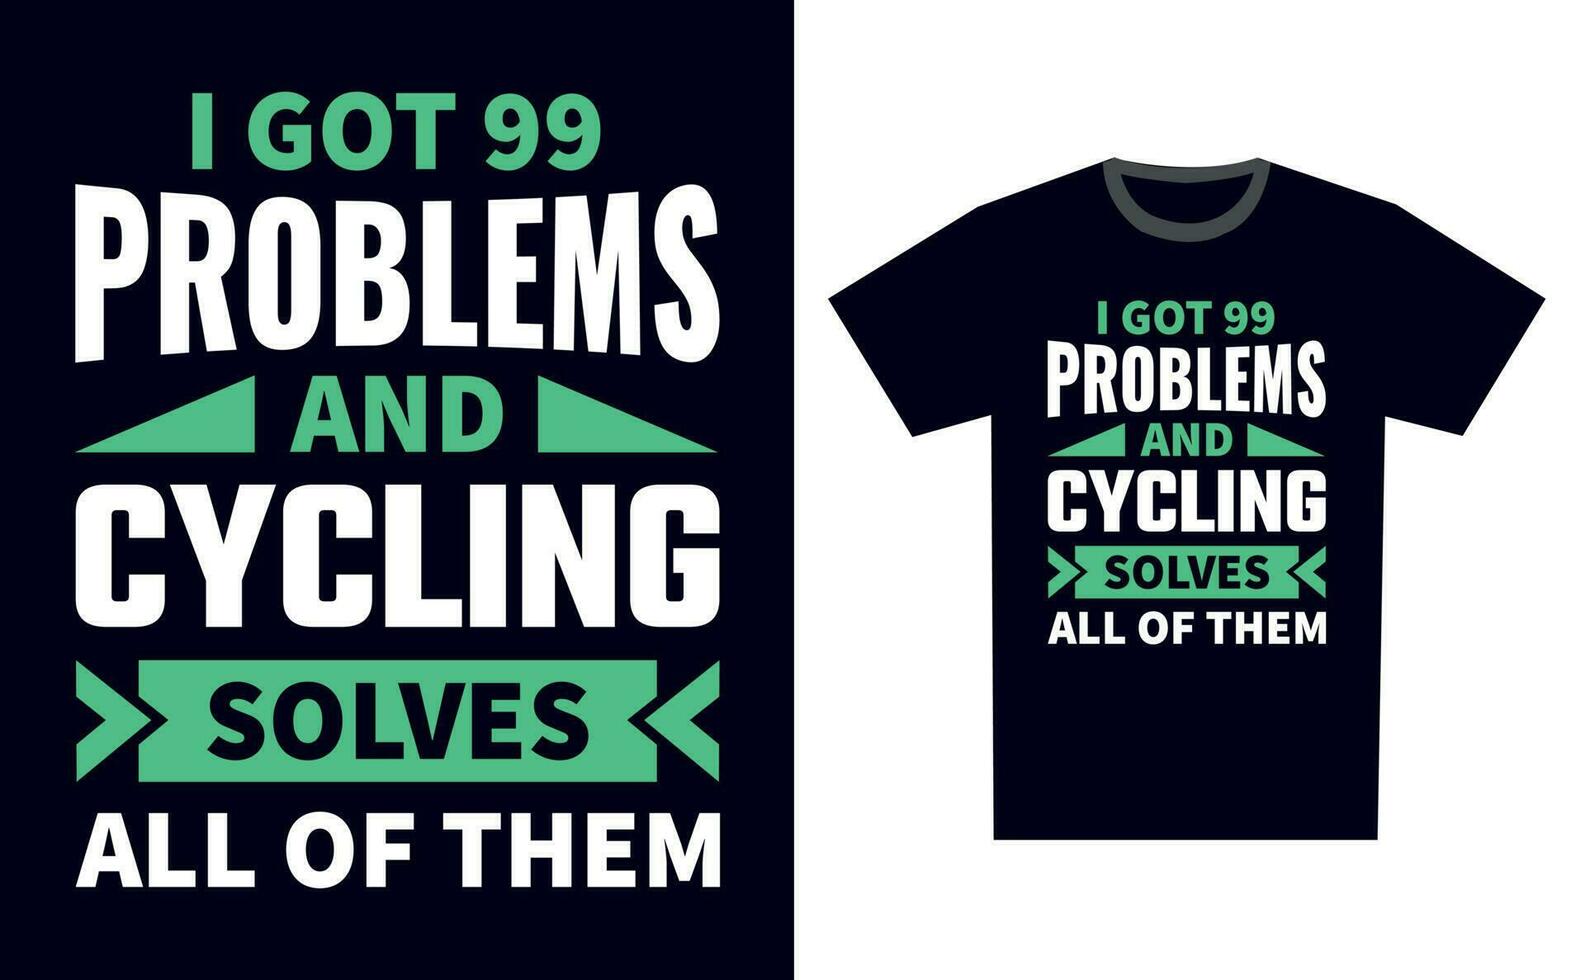 ciclismo t camisa Projeto modelo vetor